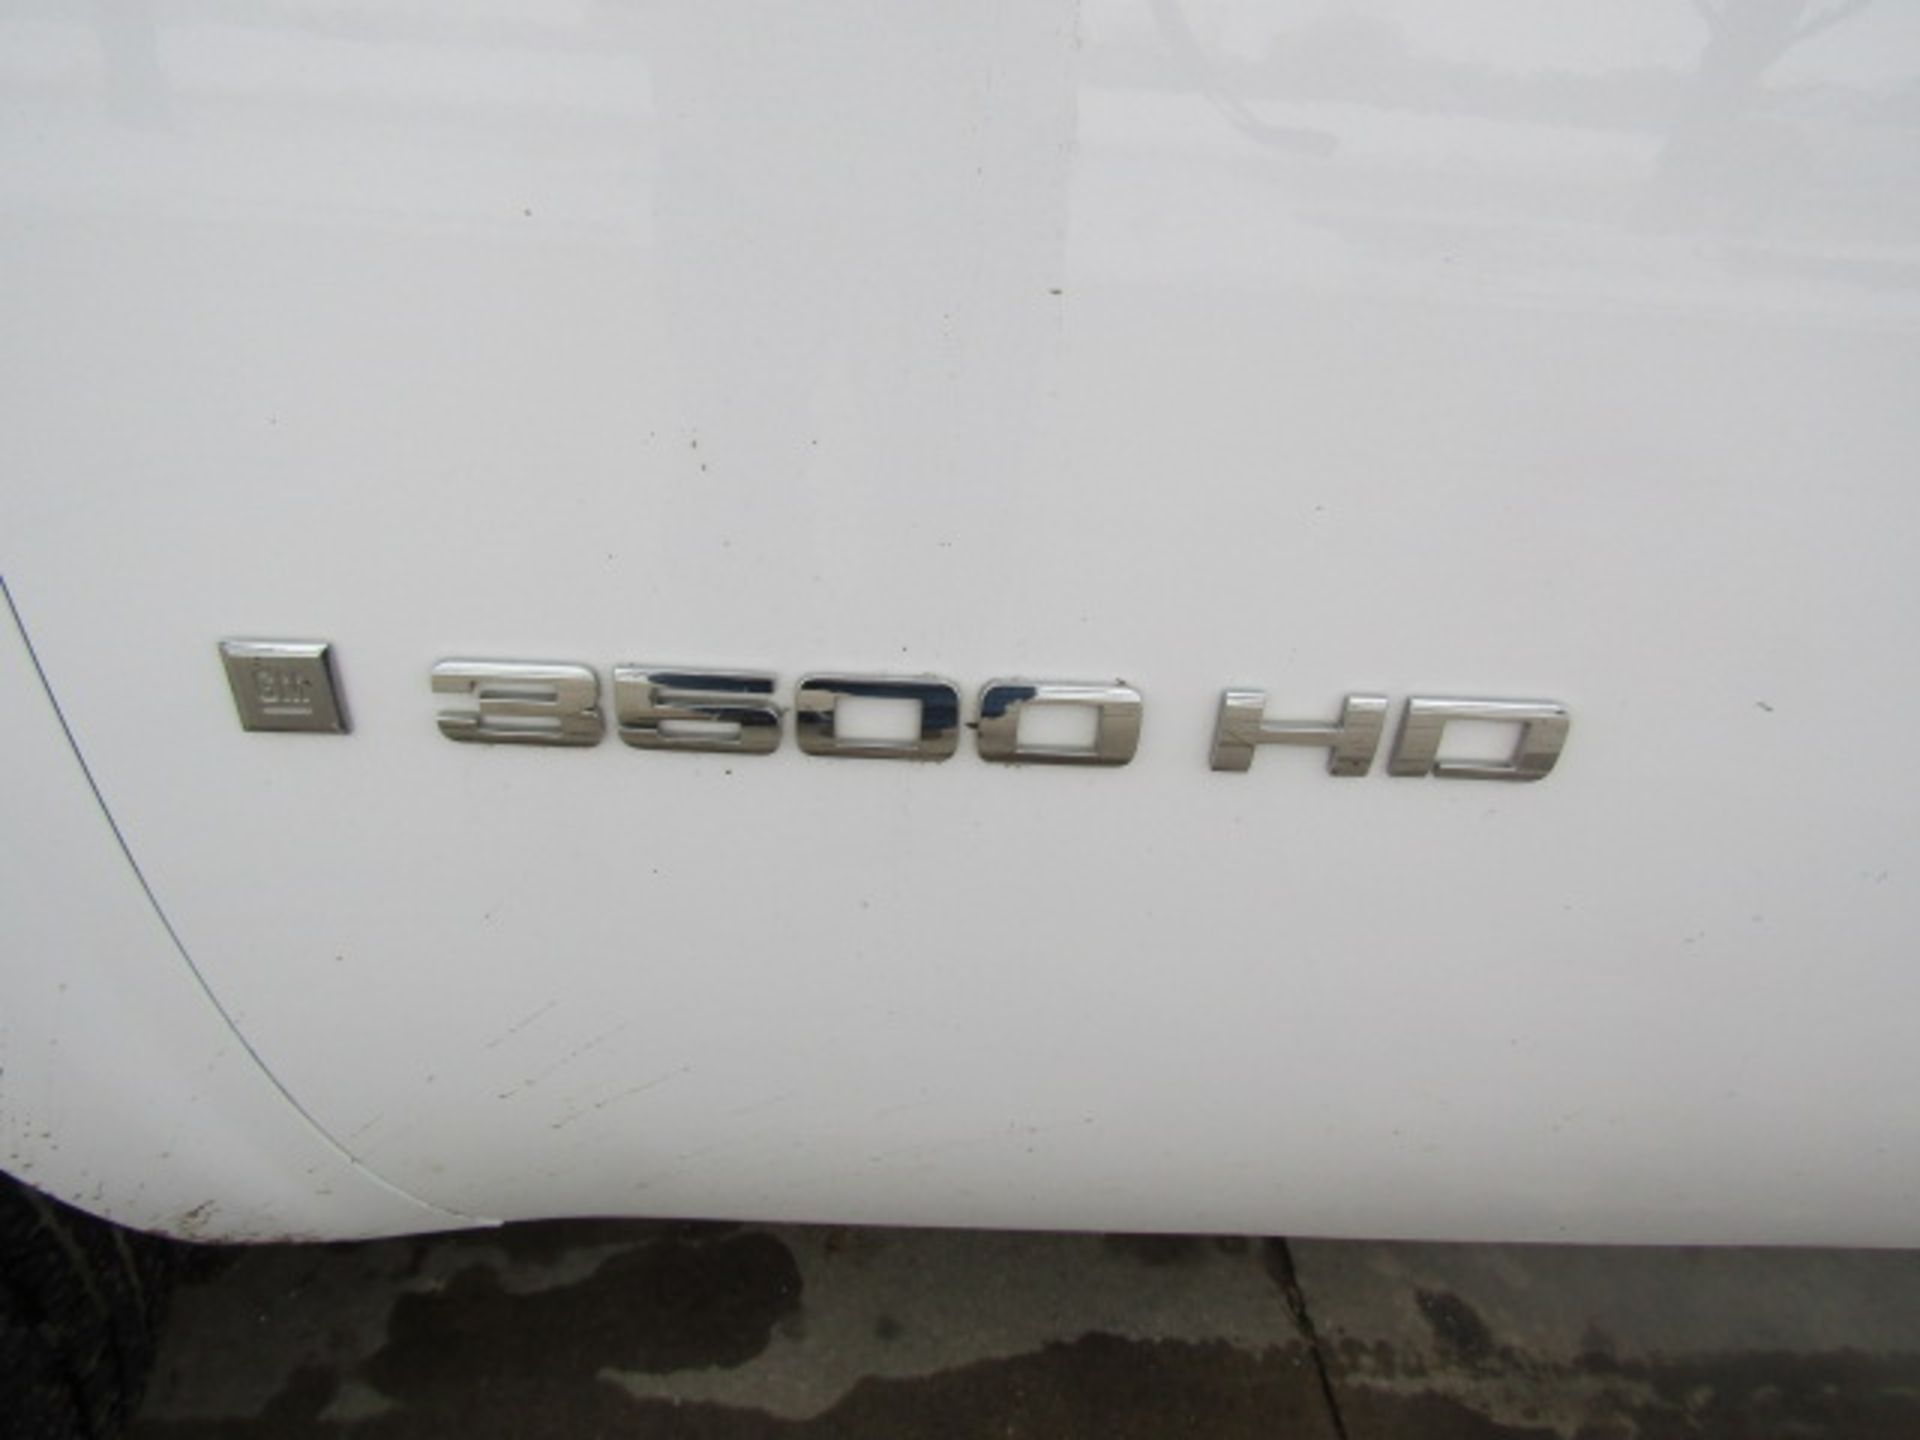 2008 Chevy Silverado K3500HD Crew Cab Utility 4x4, Truck, Vin # 1GBJK39628E217401, Allison Automatic - Image 14 of 27